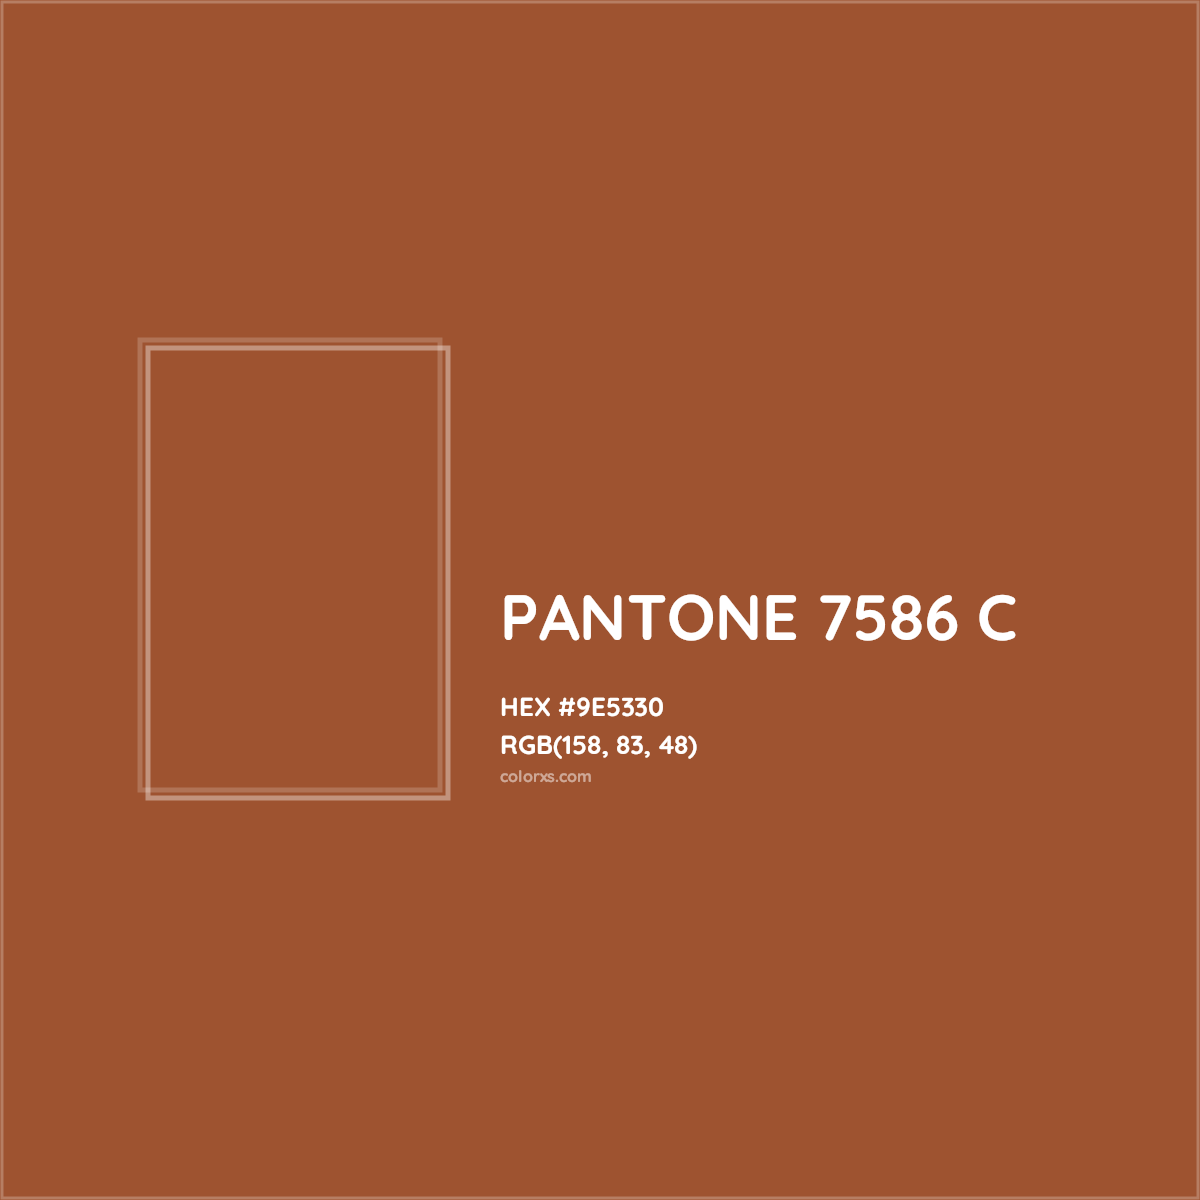 HEX #9E5330 PANTONE 7586 C CMS Pantone PMS - Color Code